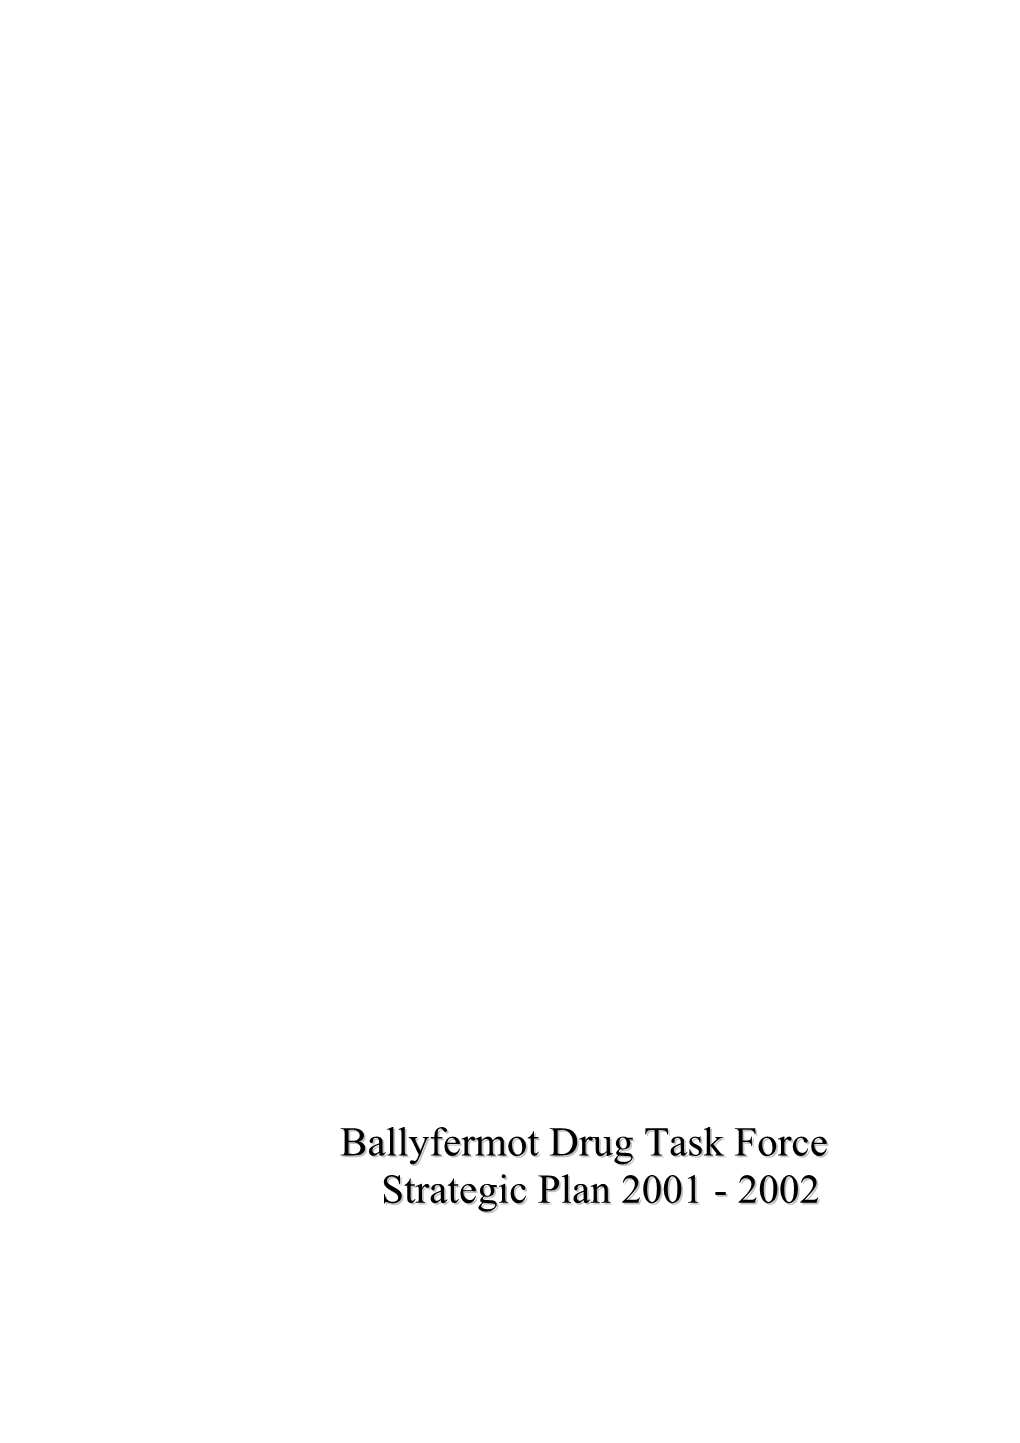 PDF (Ballyfermot Drug Task Force